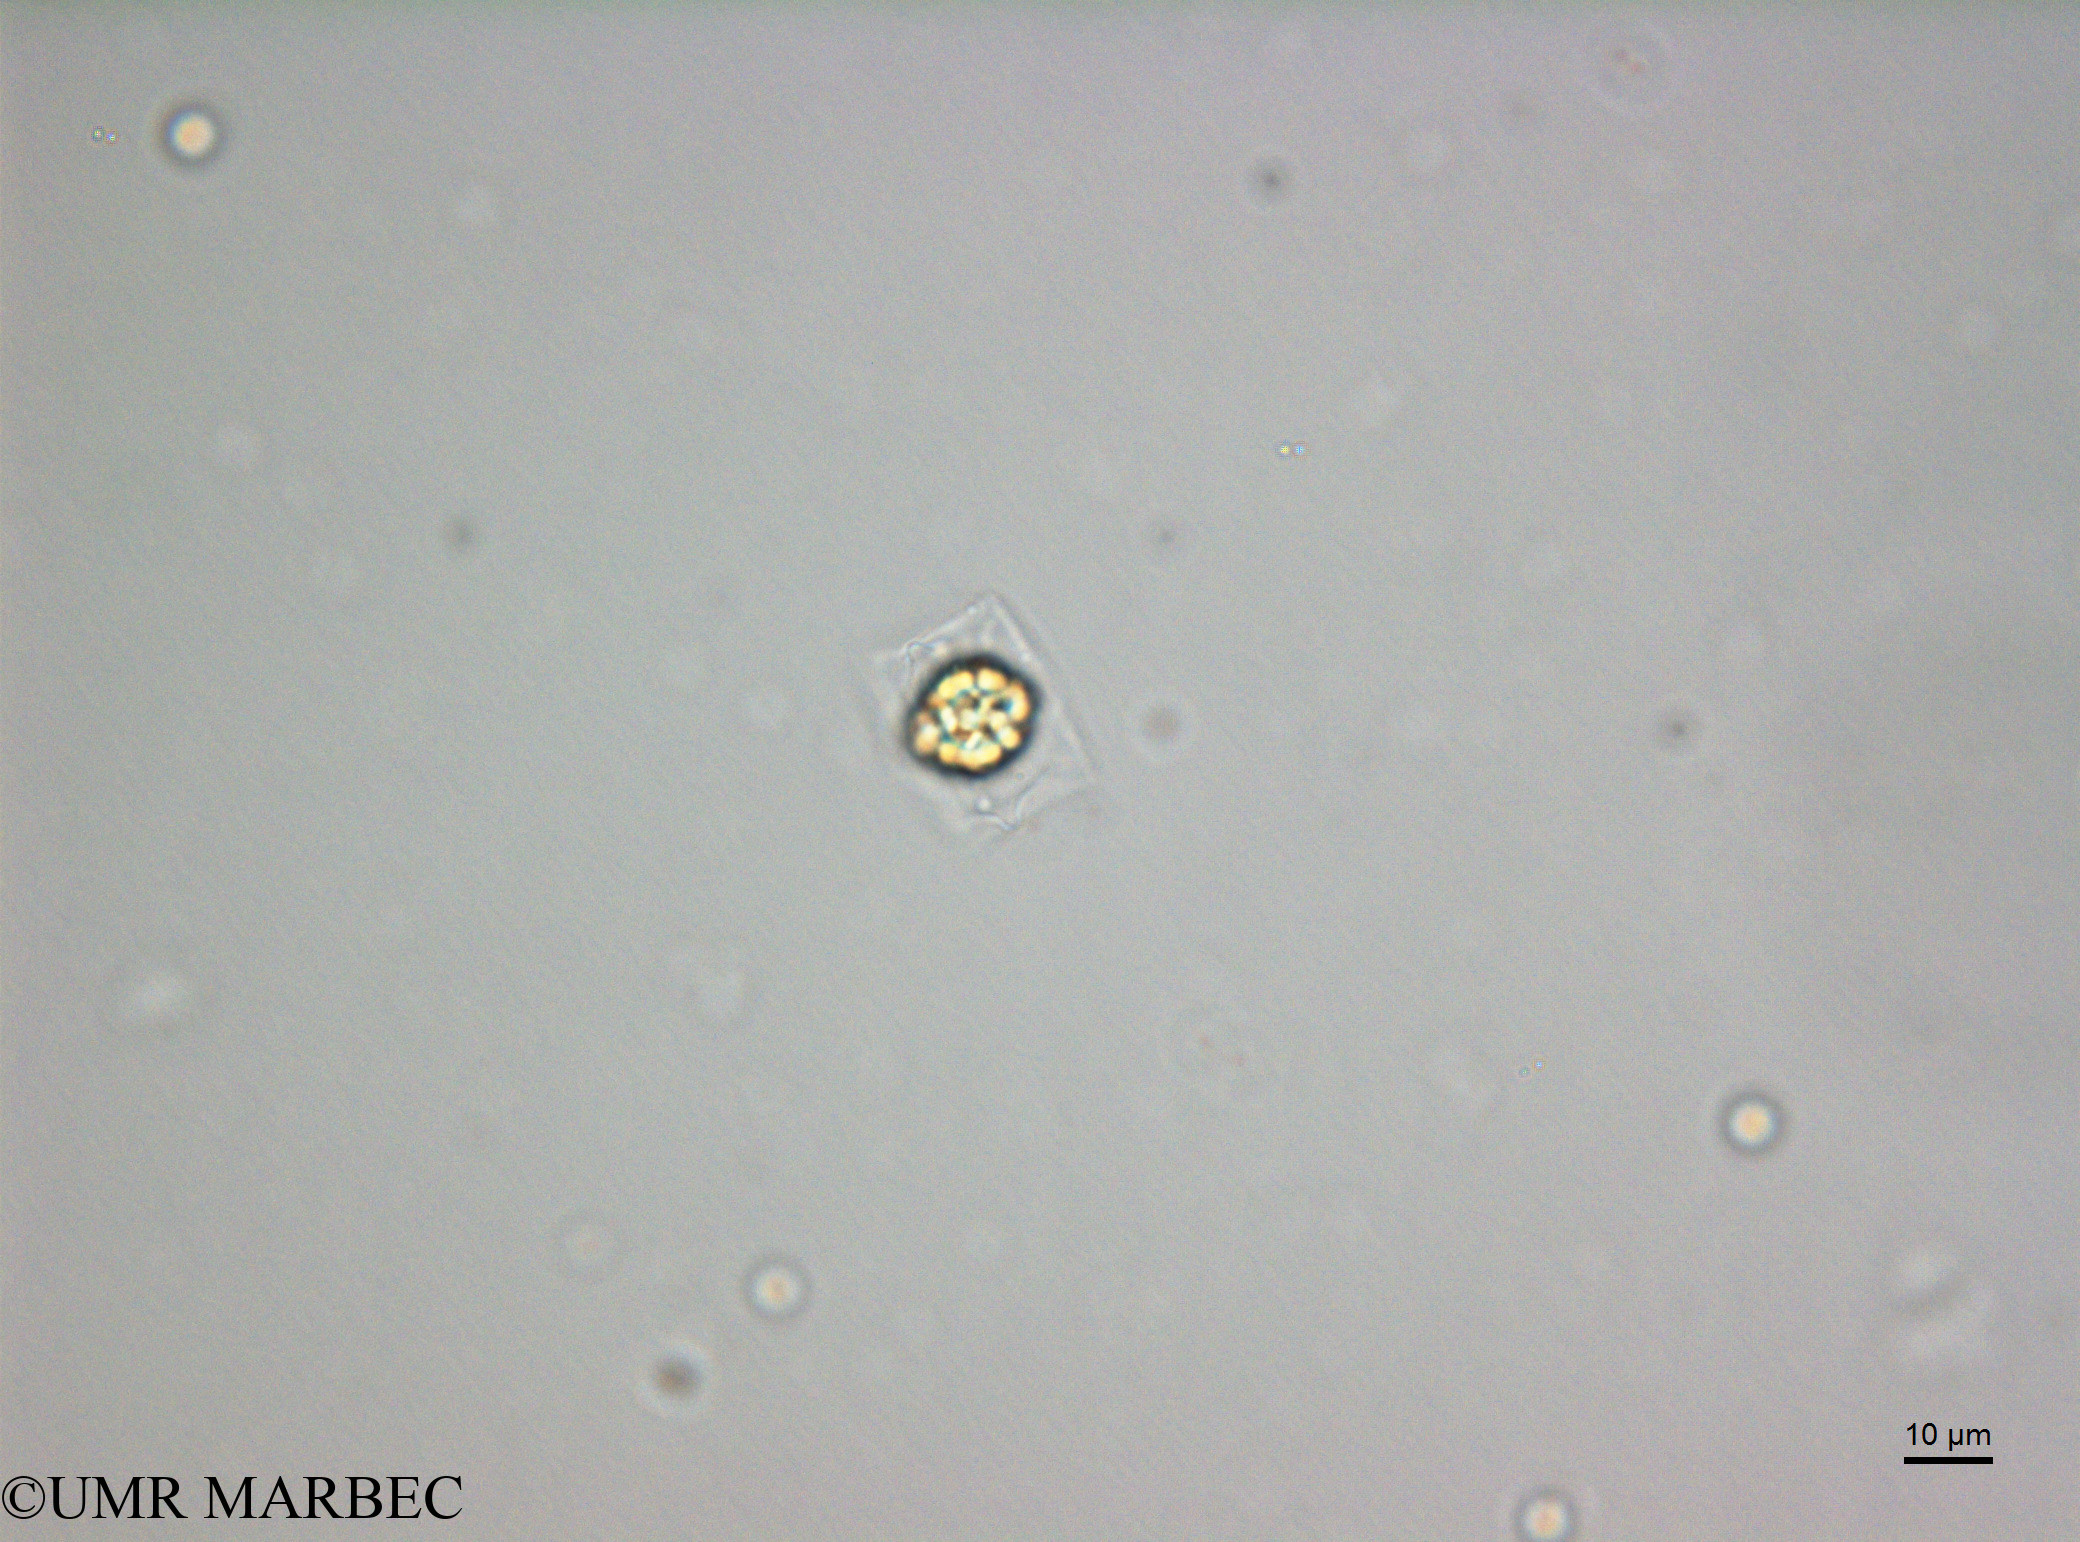 phyto/Scattered_Islands/juan_de_nova/COMMA2 November 2013/Cerataulina sp1 (D5_2_diatomee_ancien_melosira180717_001_ovl-5)(copy).jpg